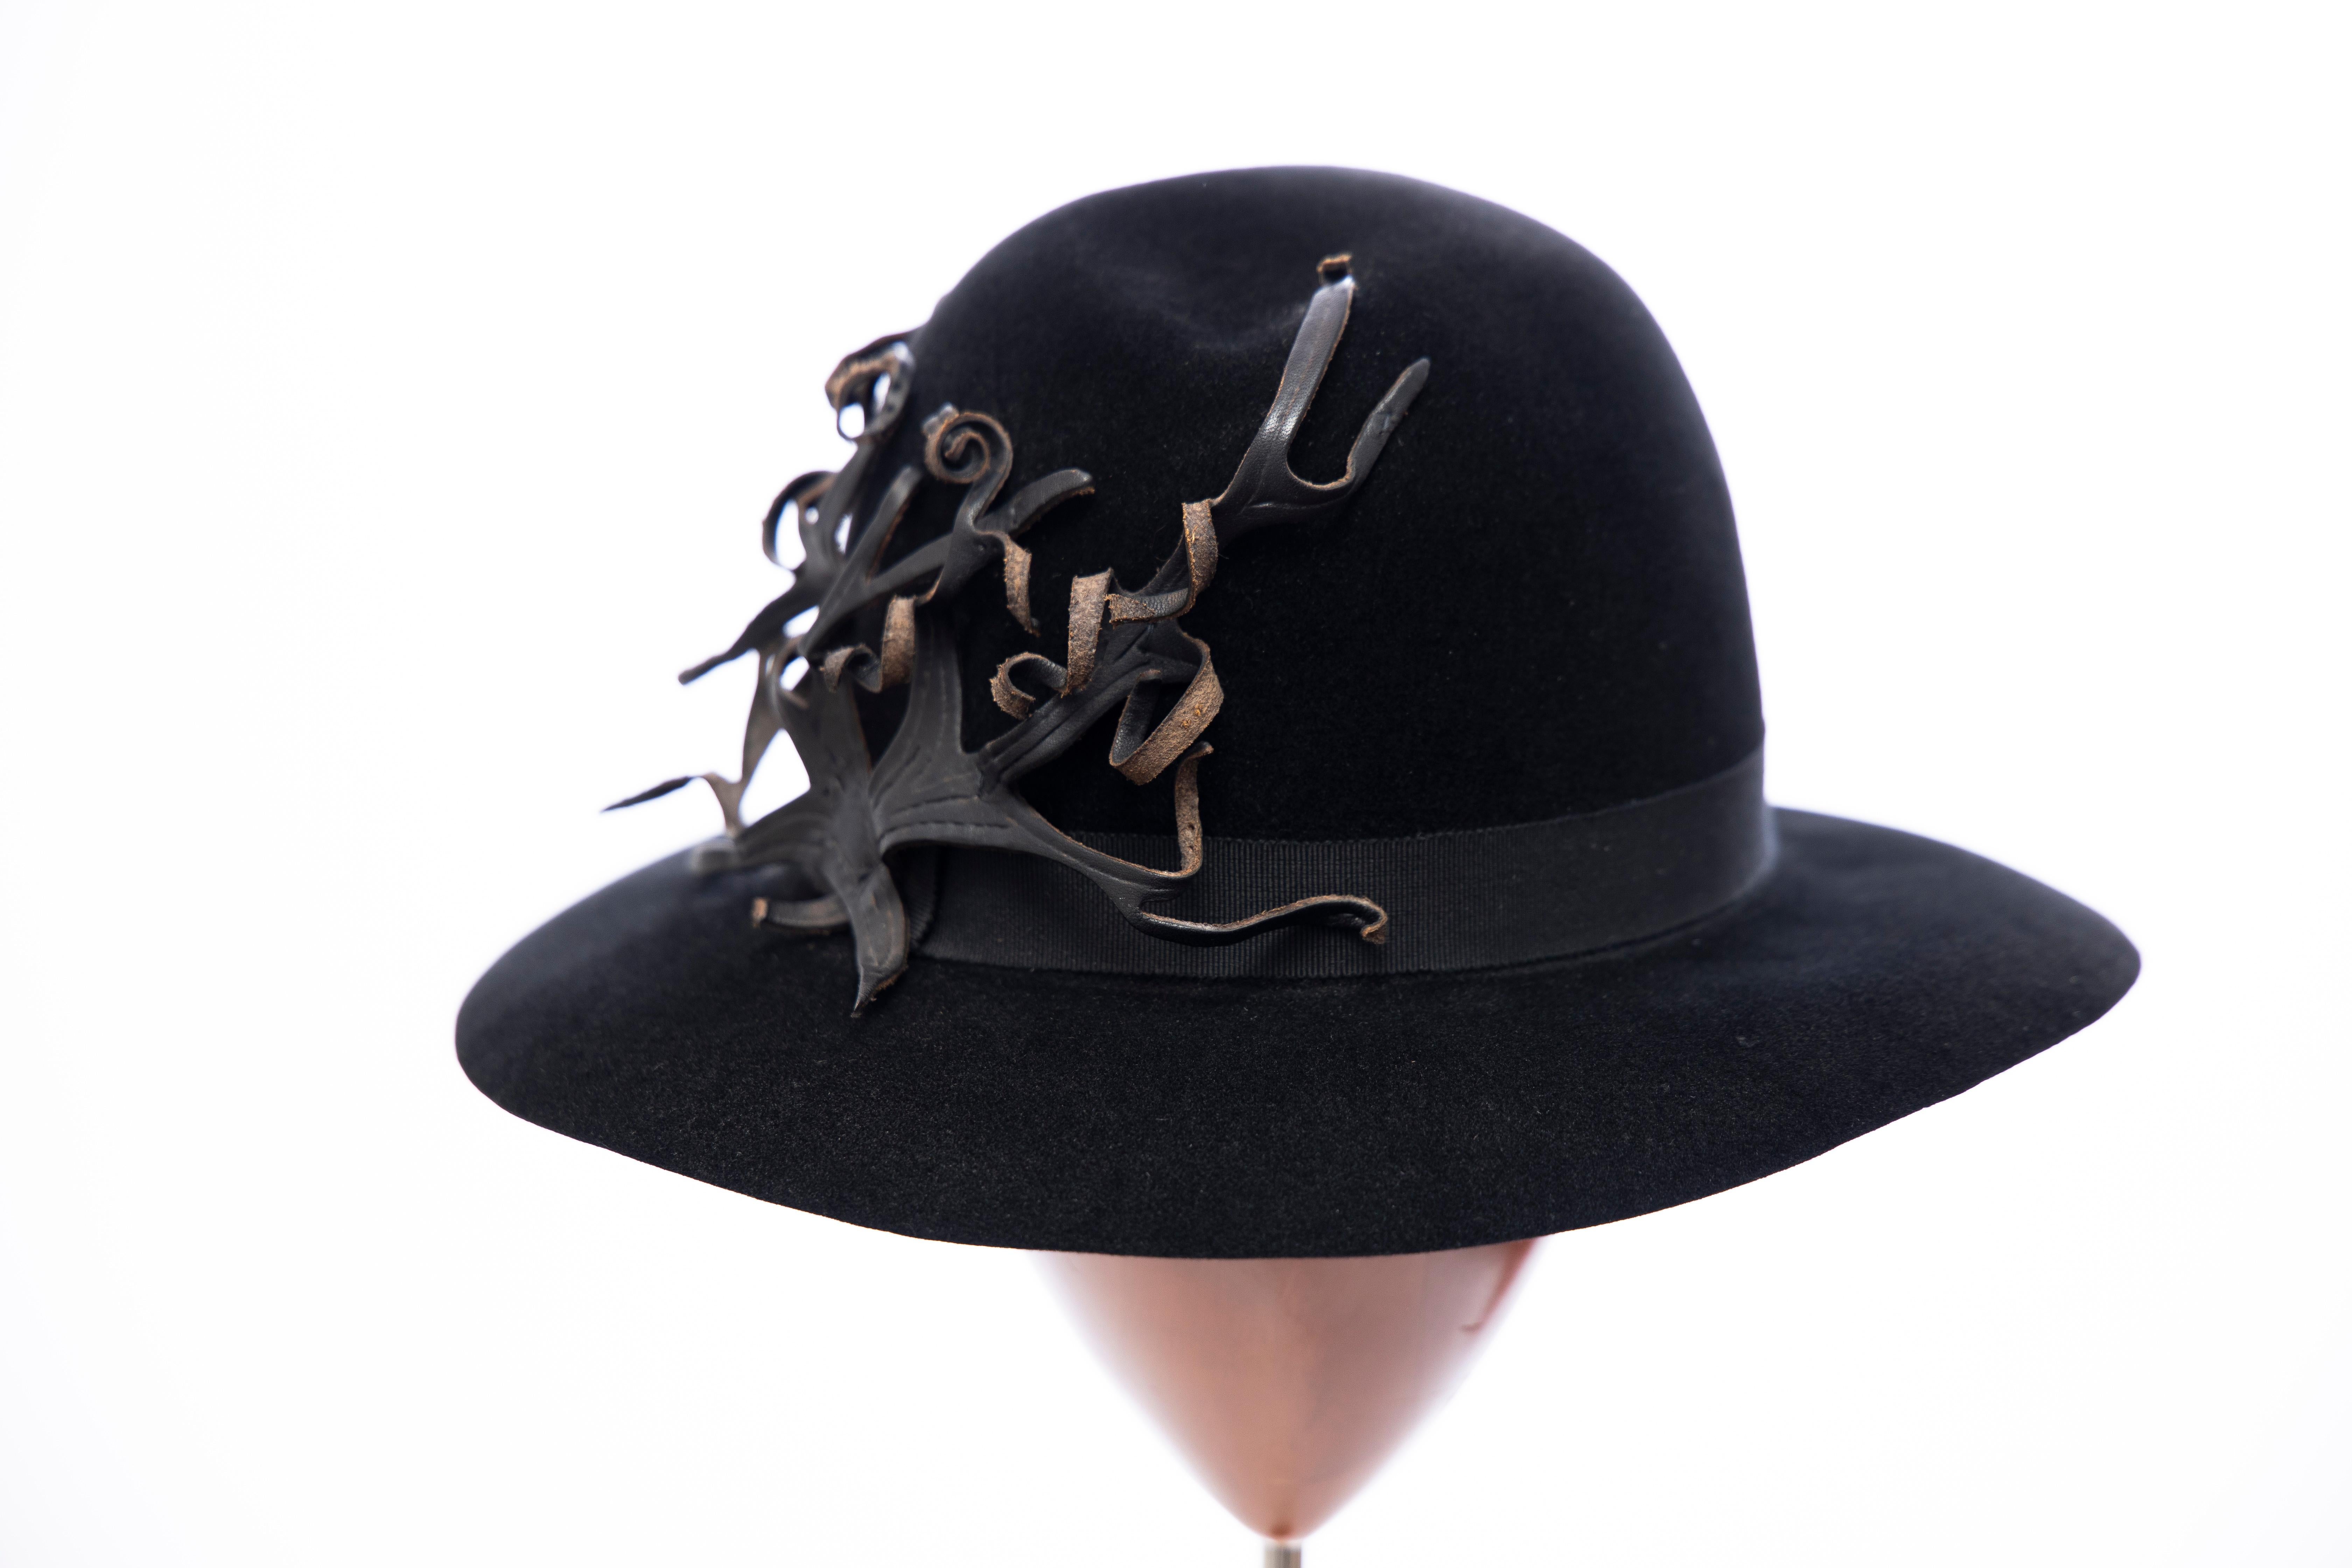 Yohji Yamamoto Pour Homme, ca. 1990's black wool felt fedora hat with black grosgrain ribbon and appliquéd black leather detail.

Circumference: 24.25